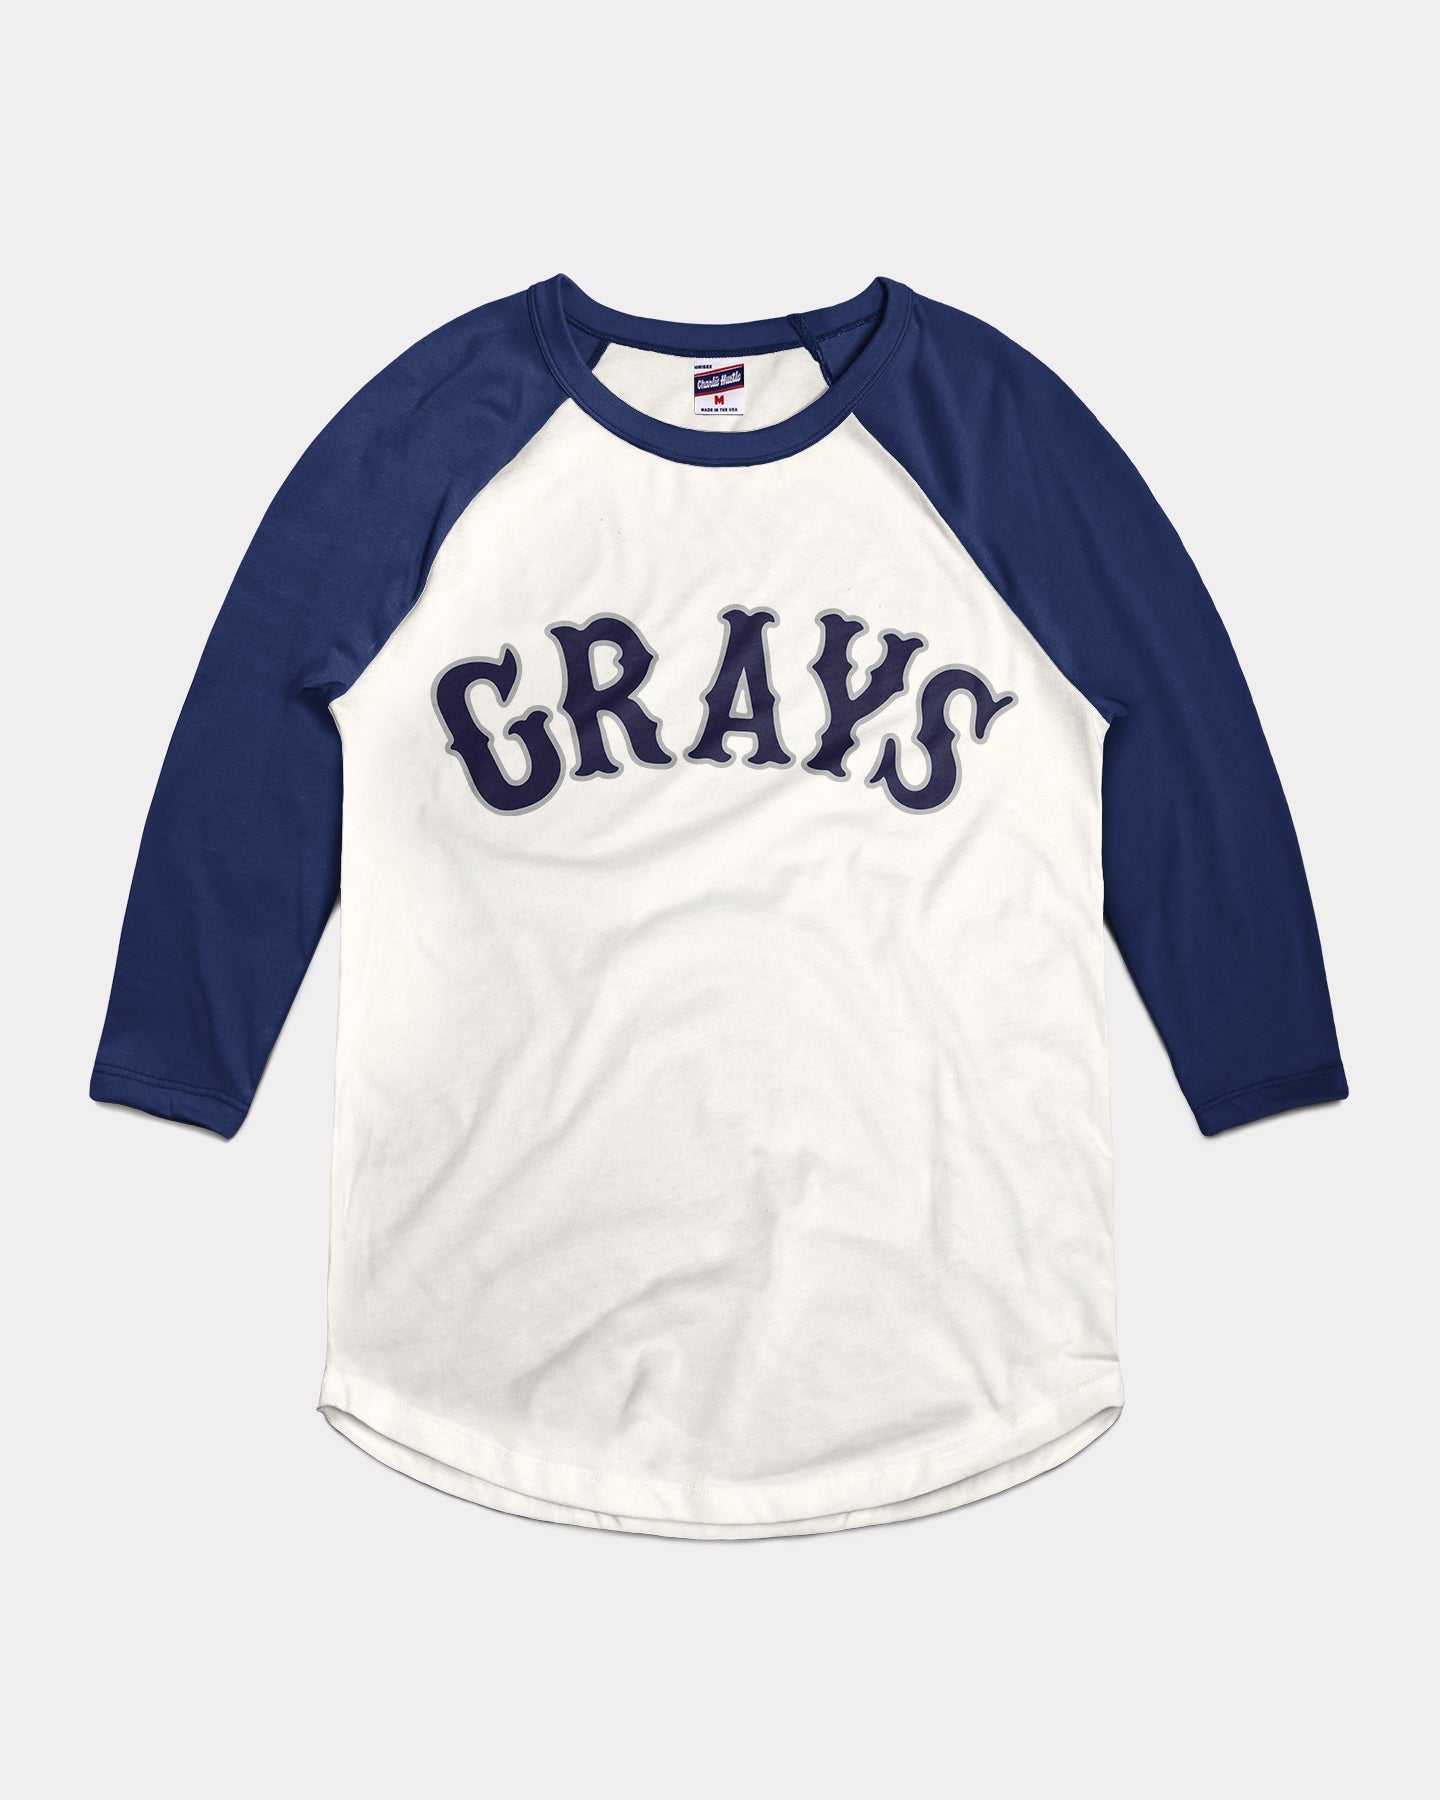 Homestead Grays Baseball Jersey - Navy